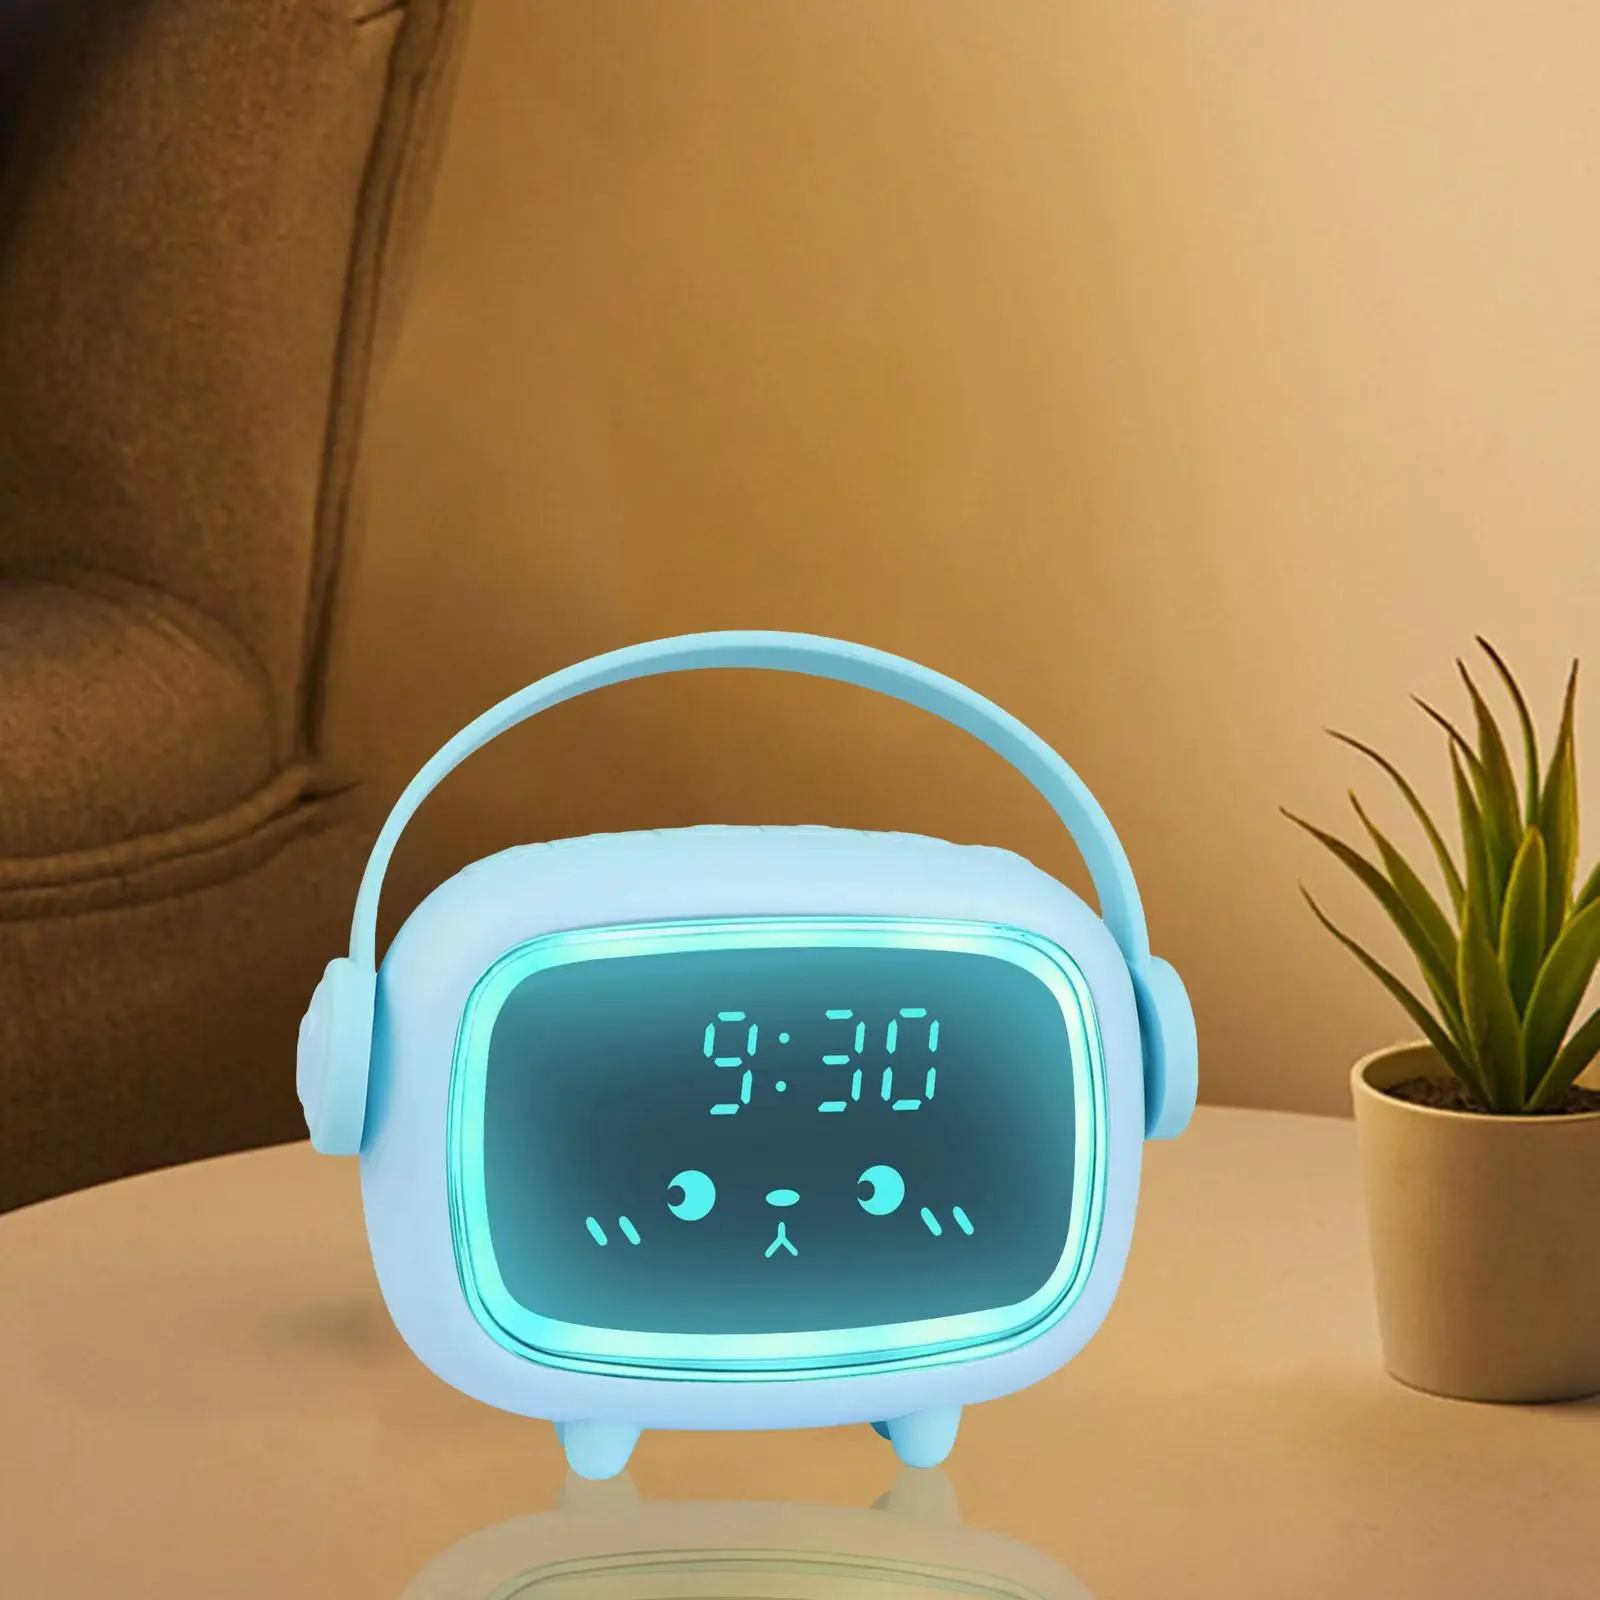 Desk Clocks Temperature Display Decor for Living Room Bedside Table Shop